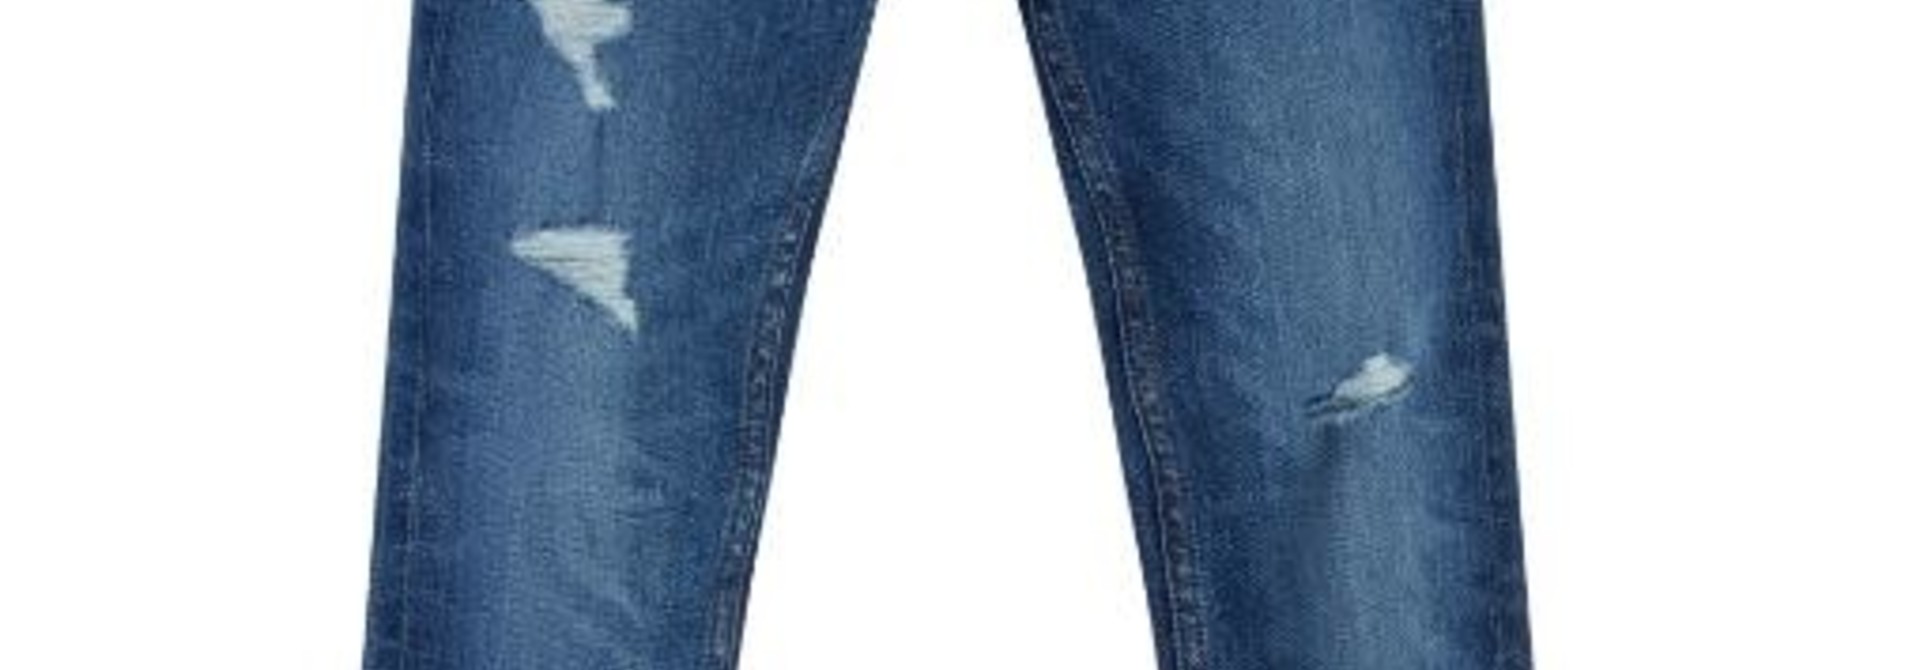 Jeans troués - BASIC SKINNY